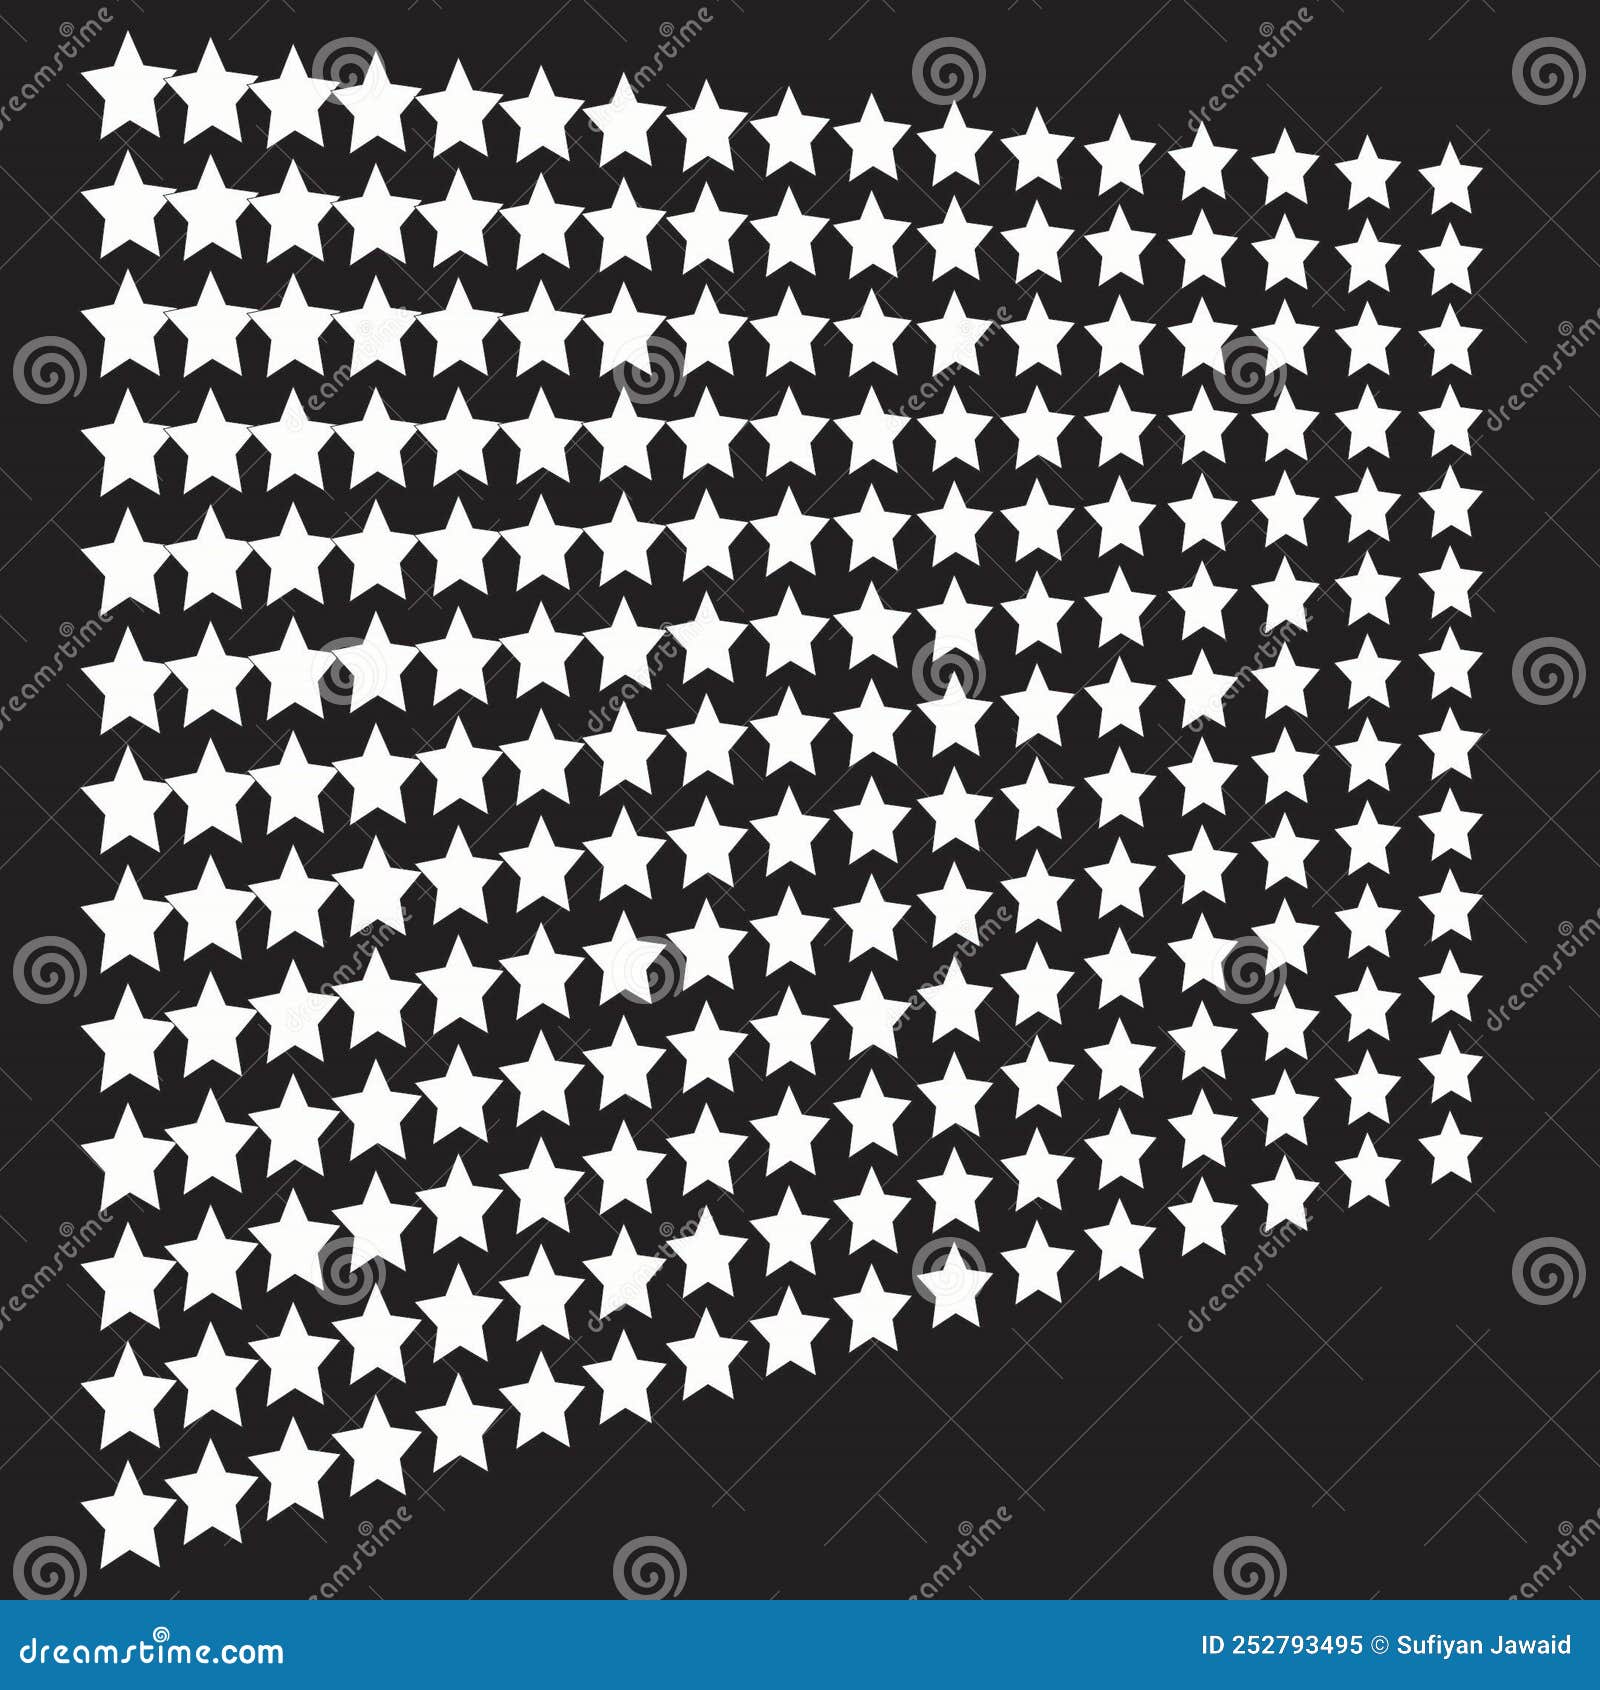 Abstract star background stock illustration. Illustration of white